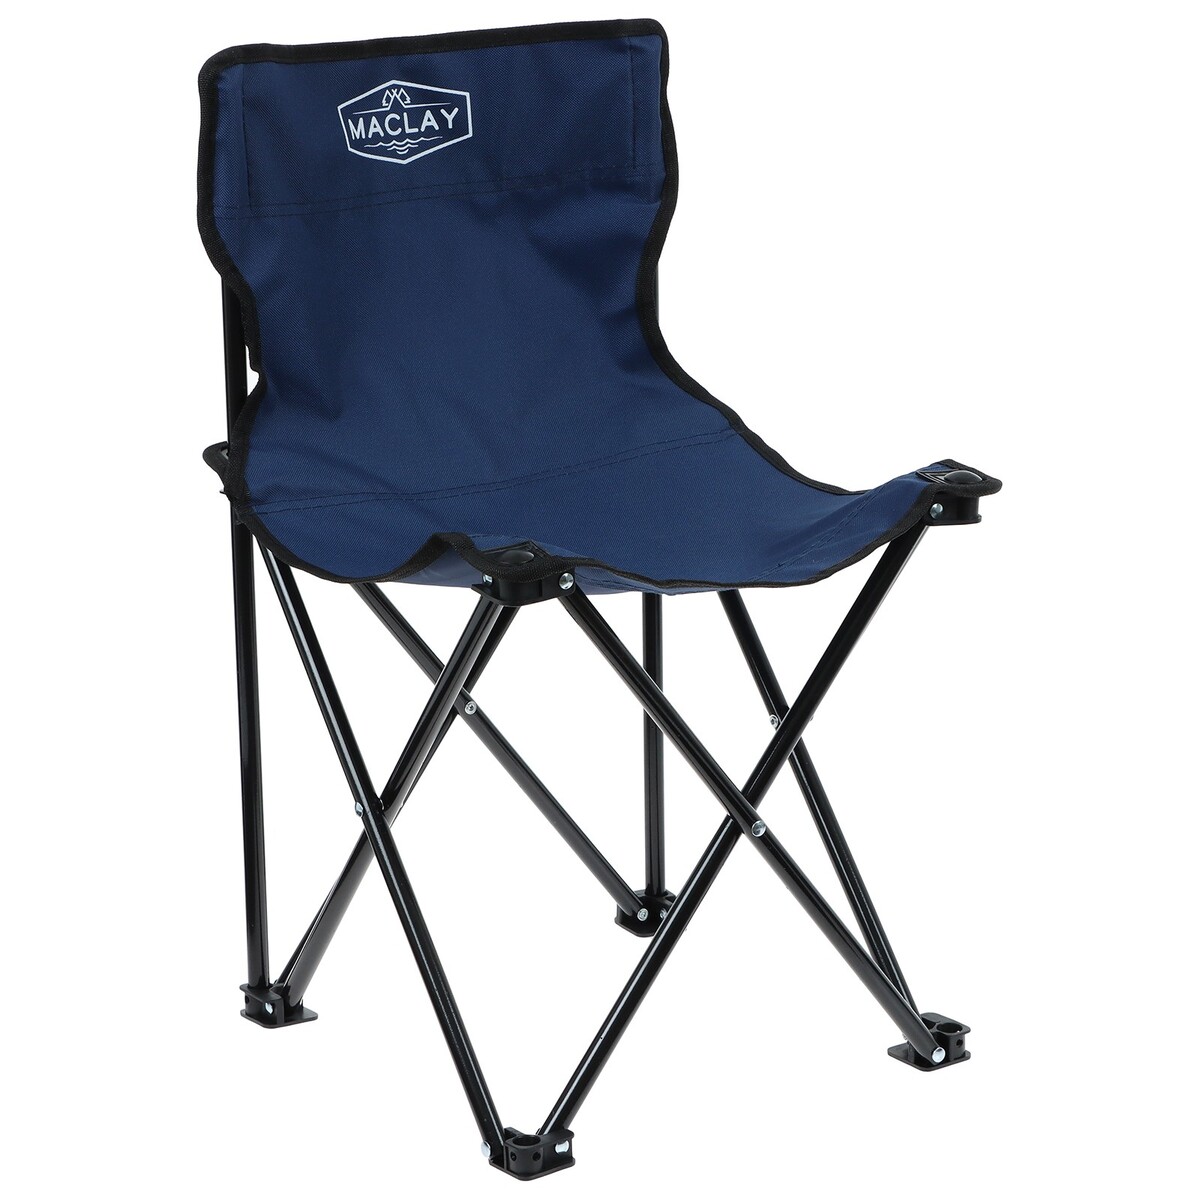 Кресло туристическое, складное, до 80 кг, размер 35 х 35 х 56 см, цвет синий Maclay